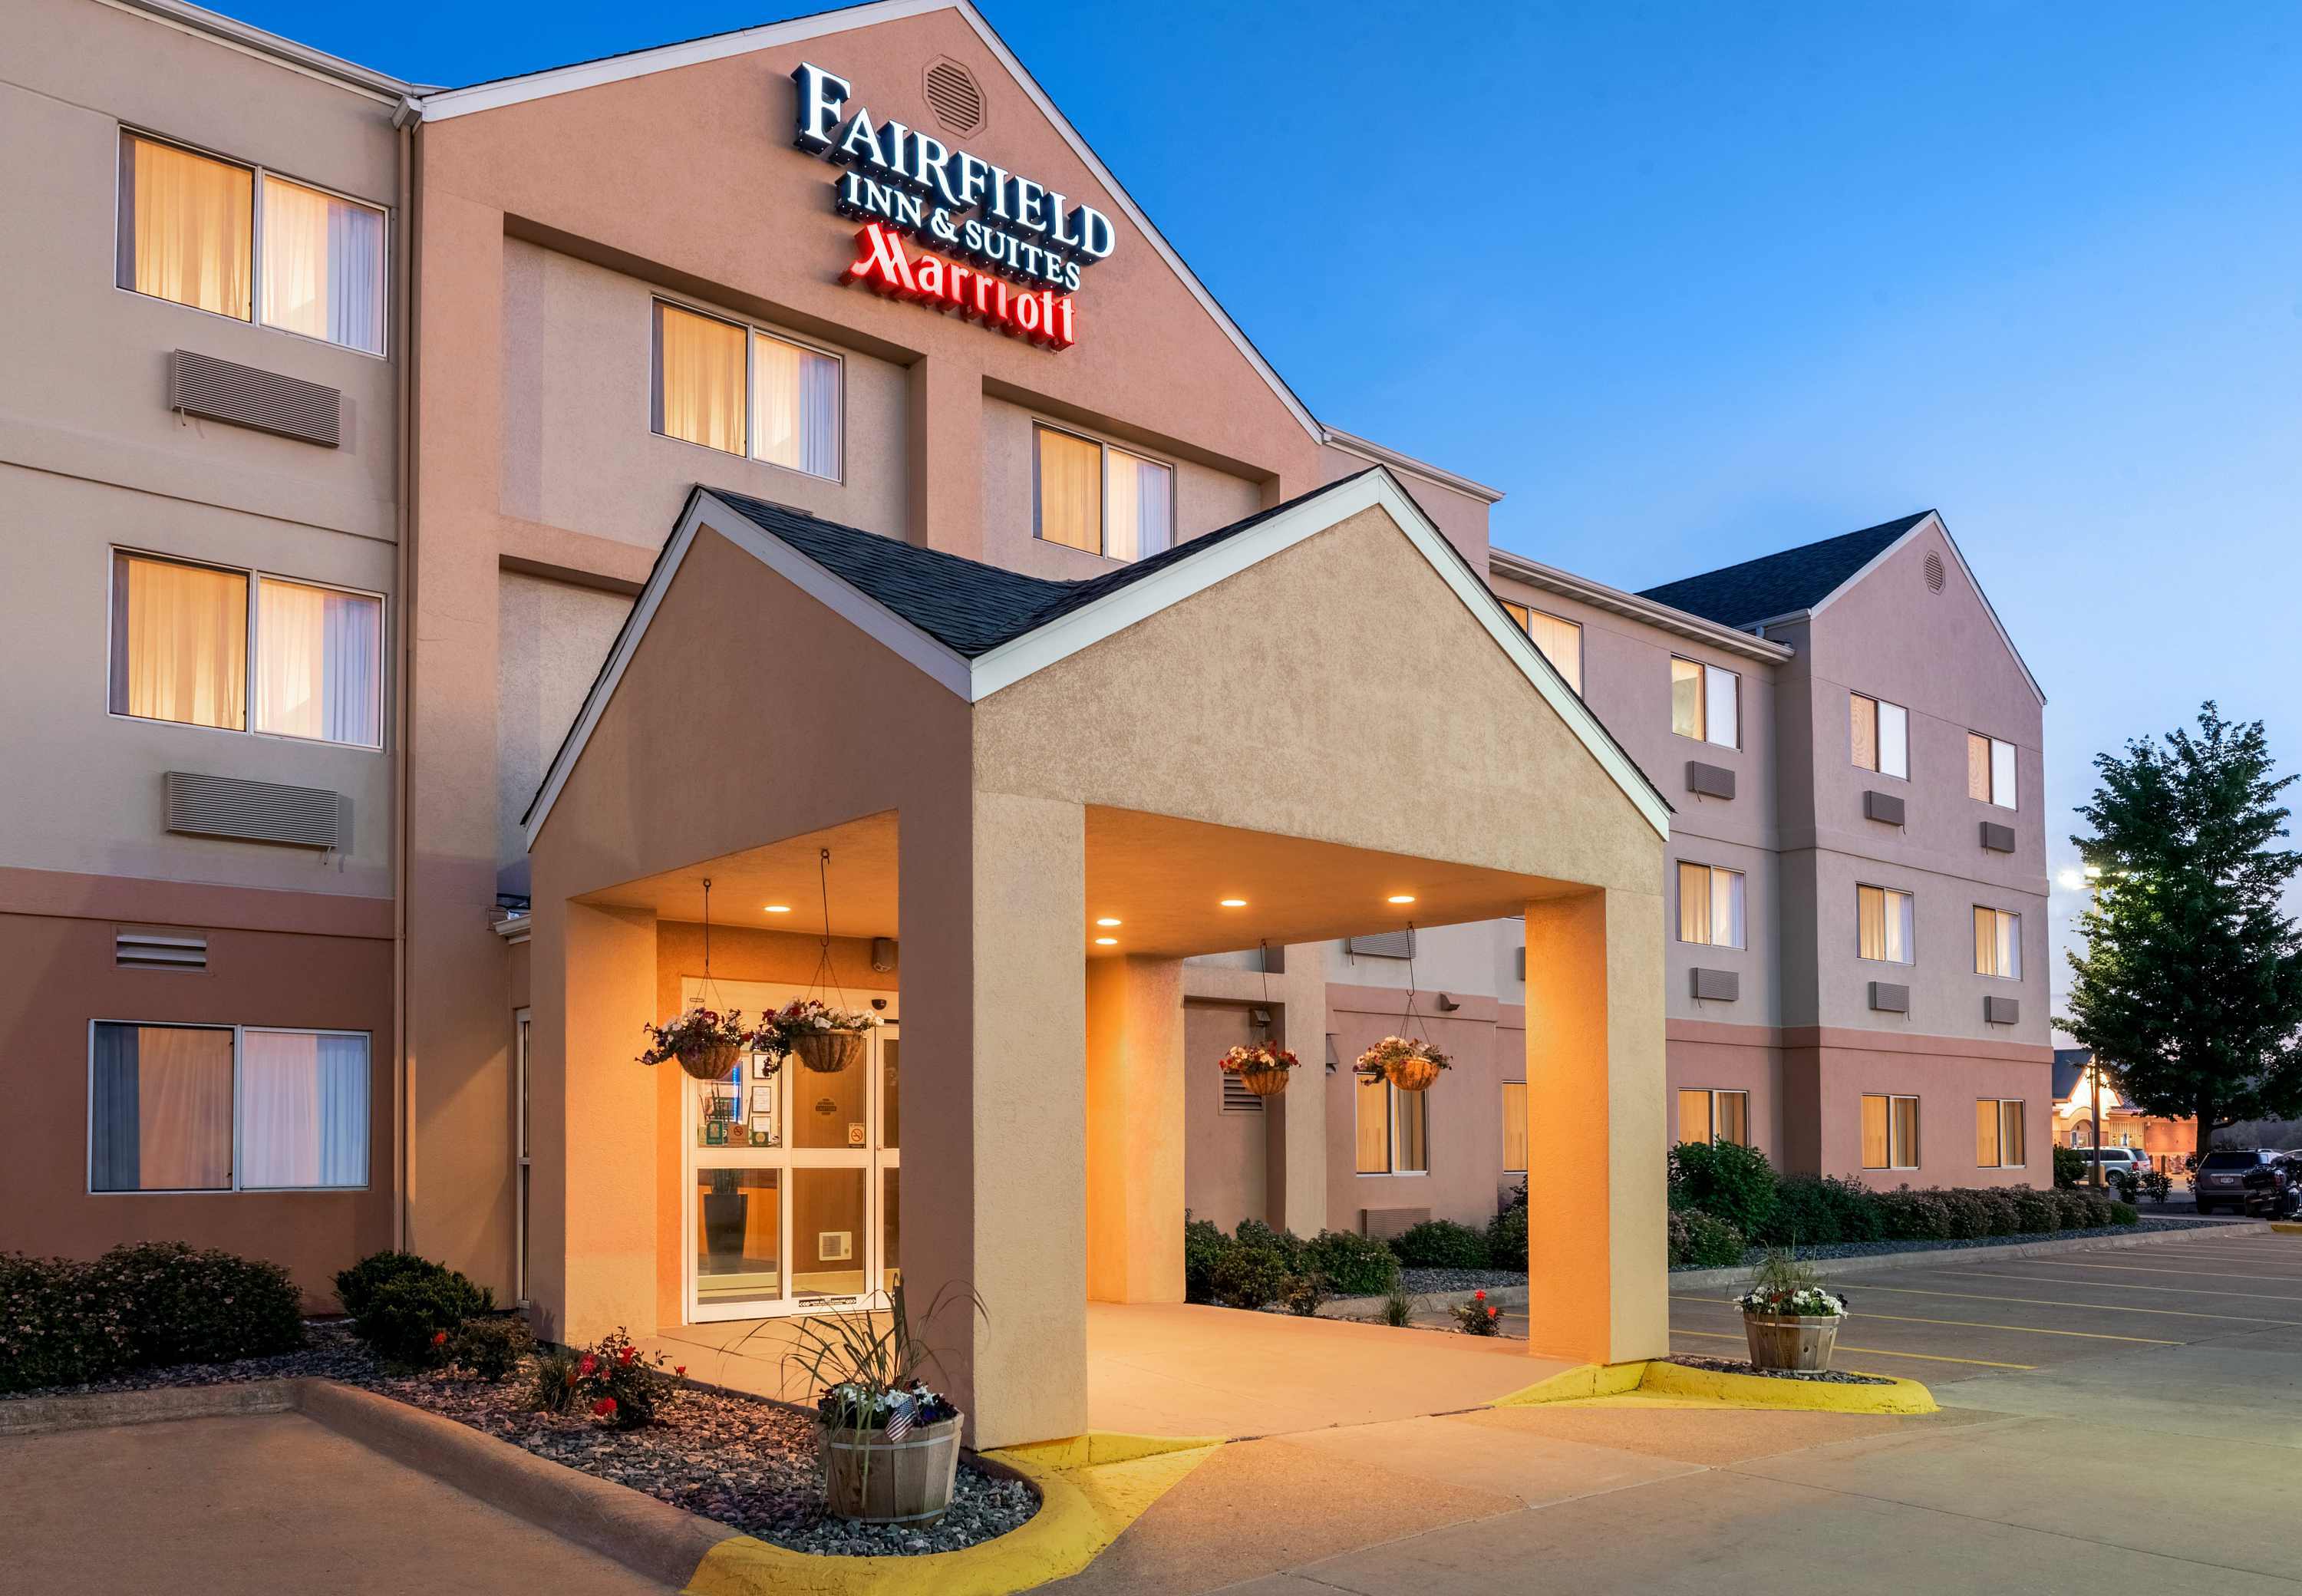 Photo of Fairfield Inn & Suites by Marriott Stevens Point, Stevens Point, WI